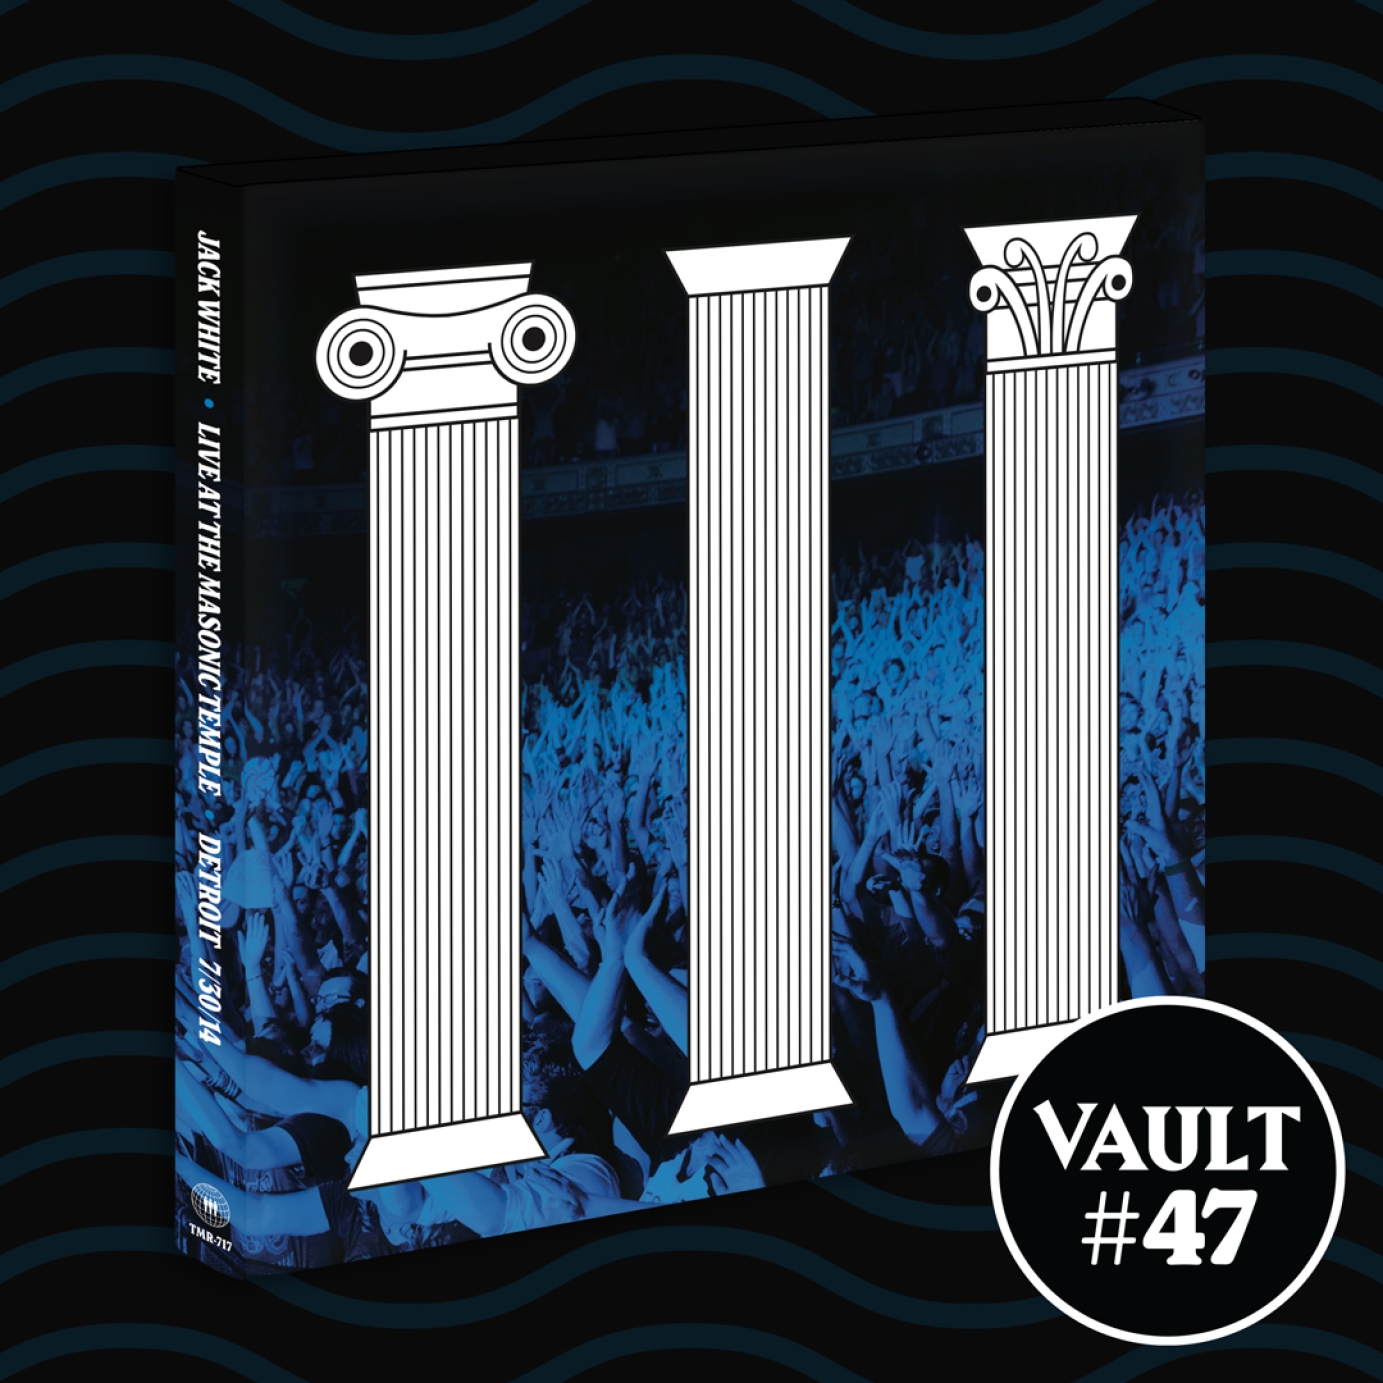 Vault 47: Jack White at the Masonic Temple